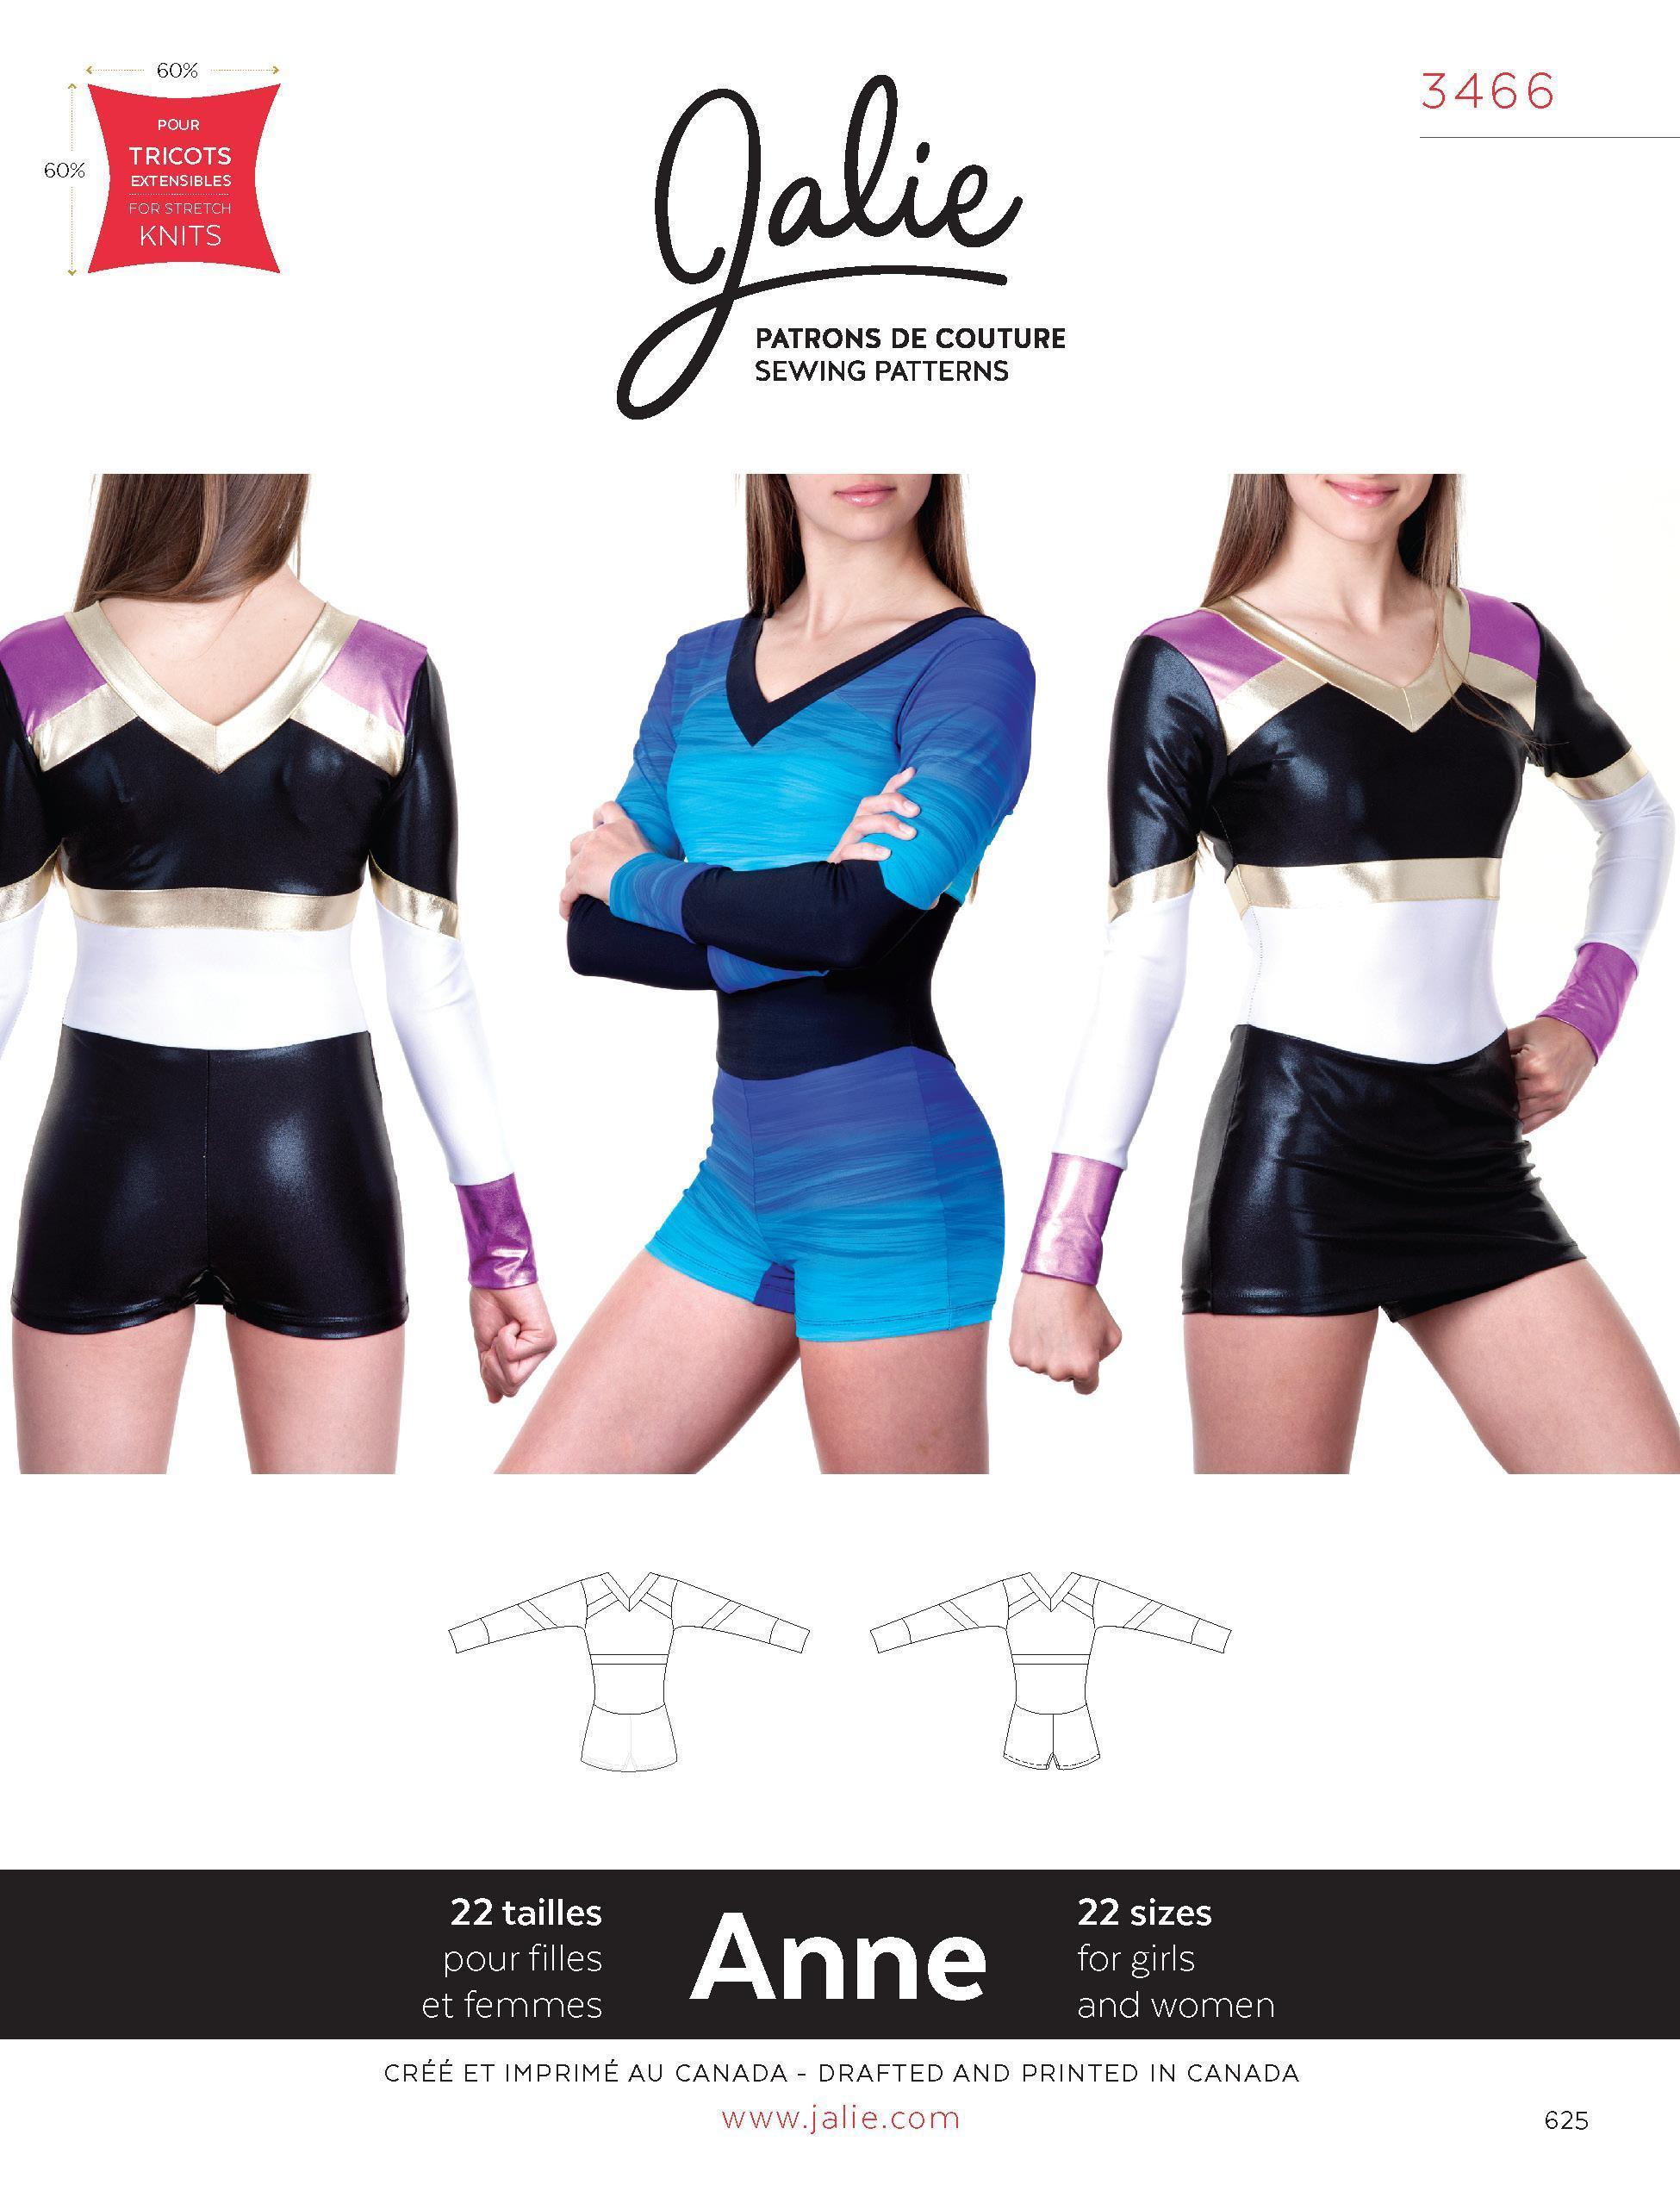 Cheer 2 Cheerleading Uniform Sewing Pattern in Girls Sizes 2-14